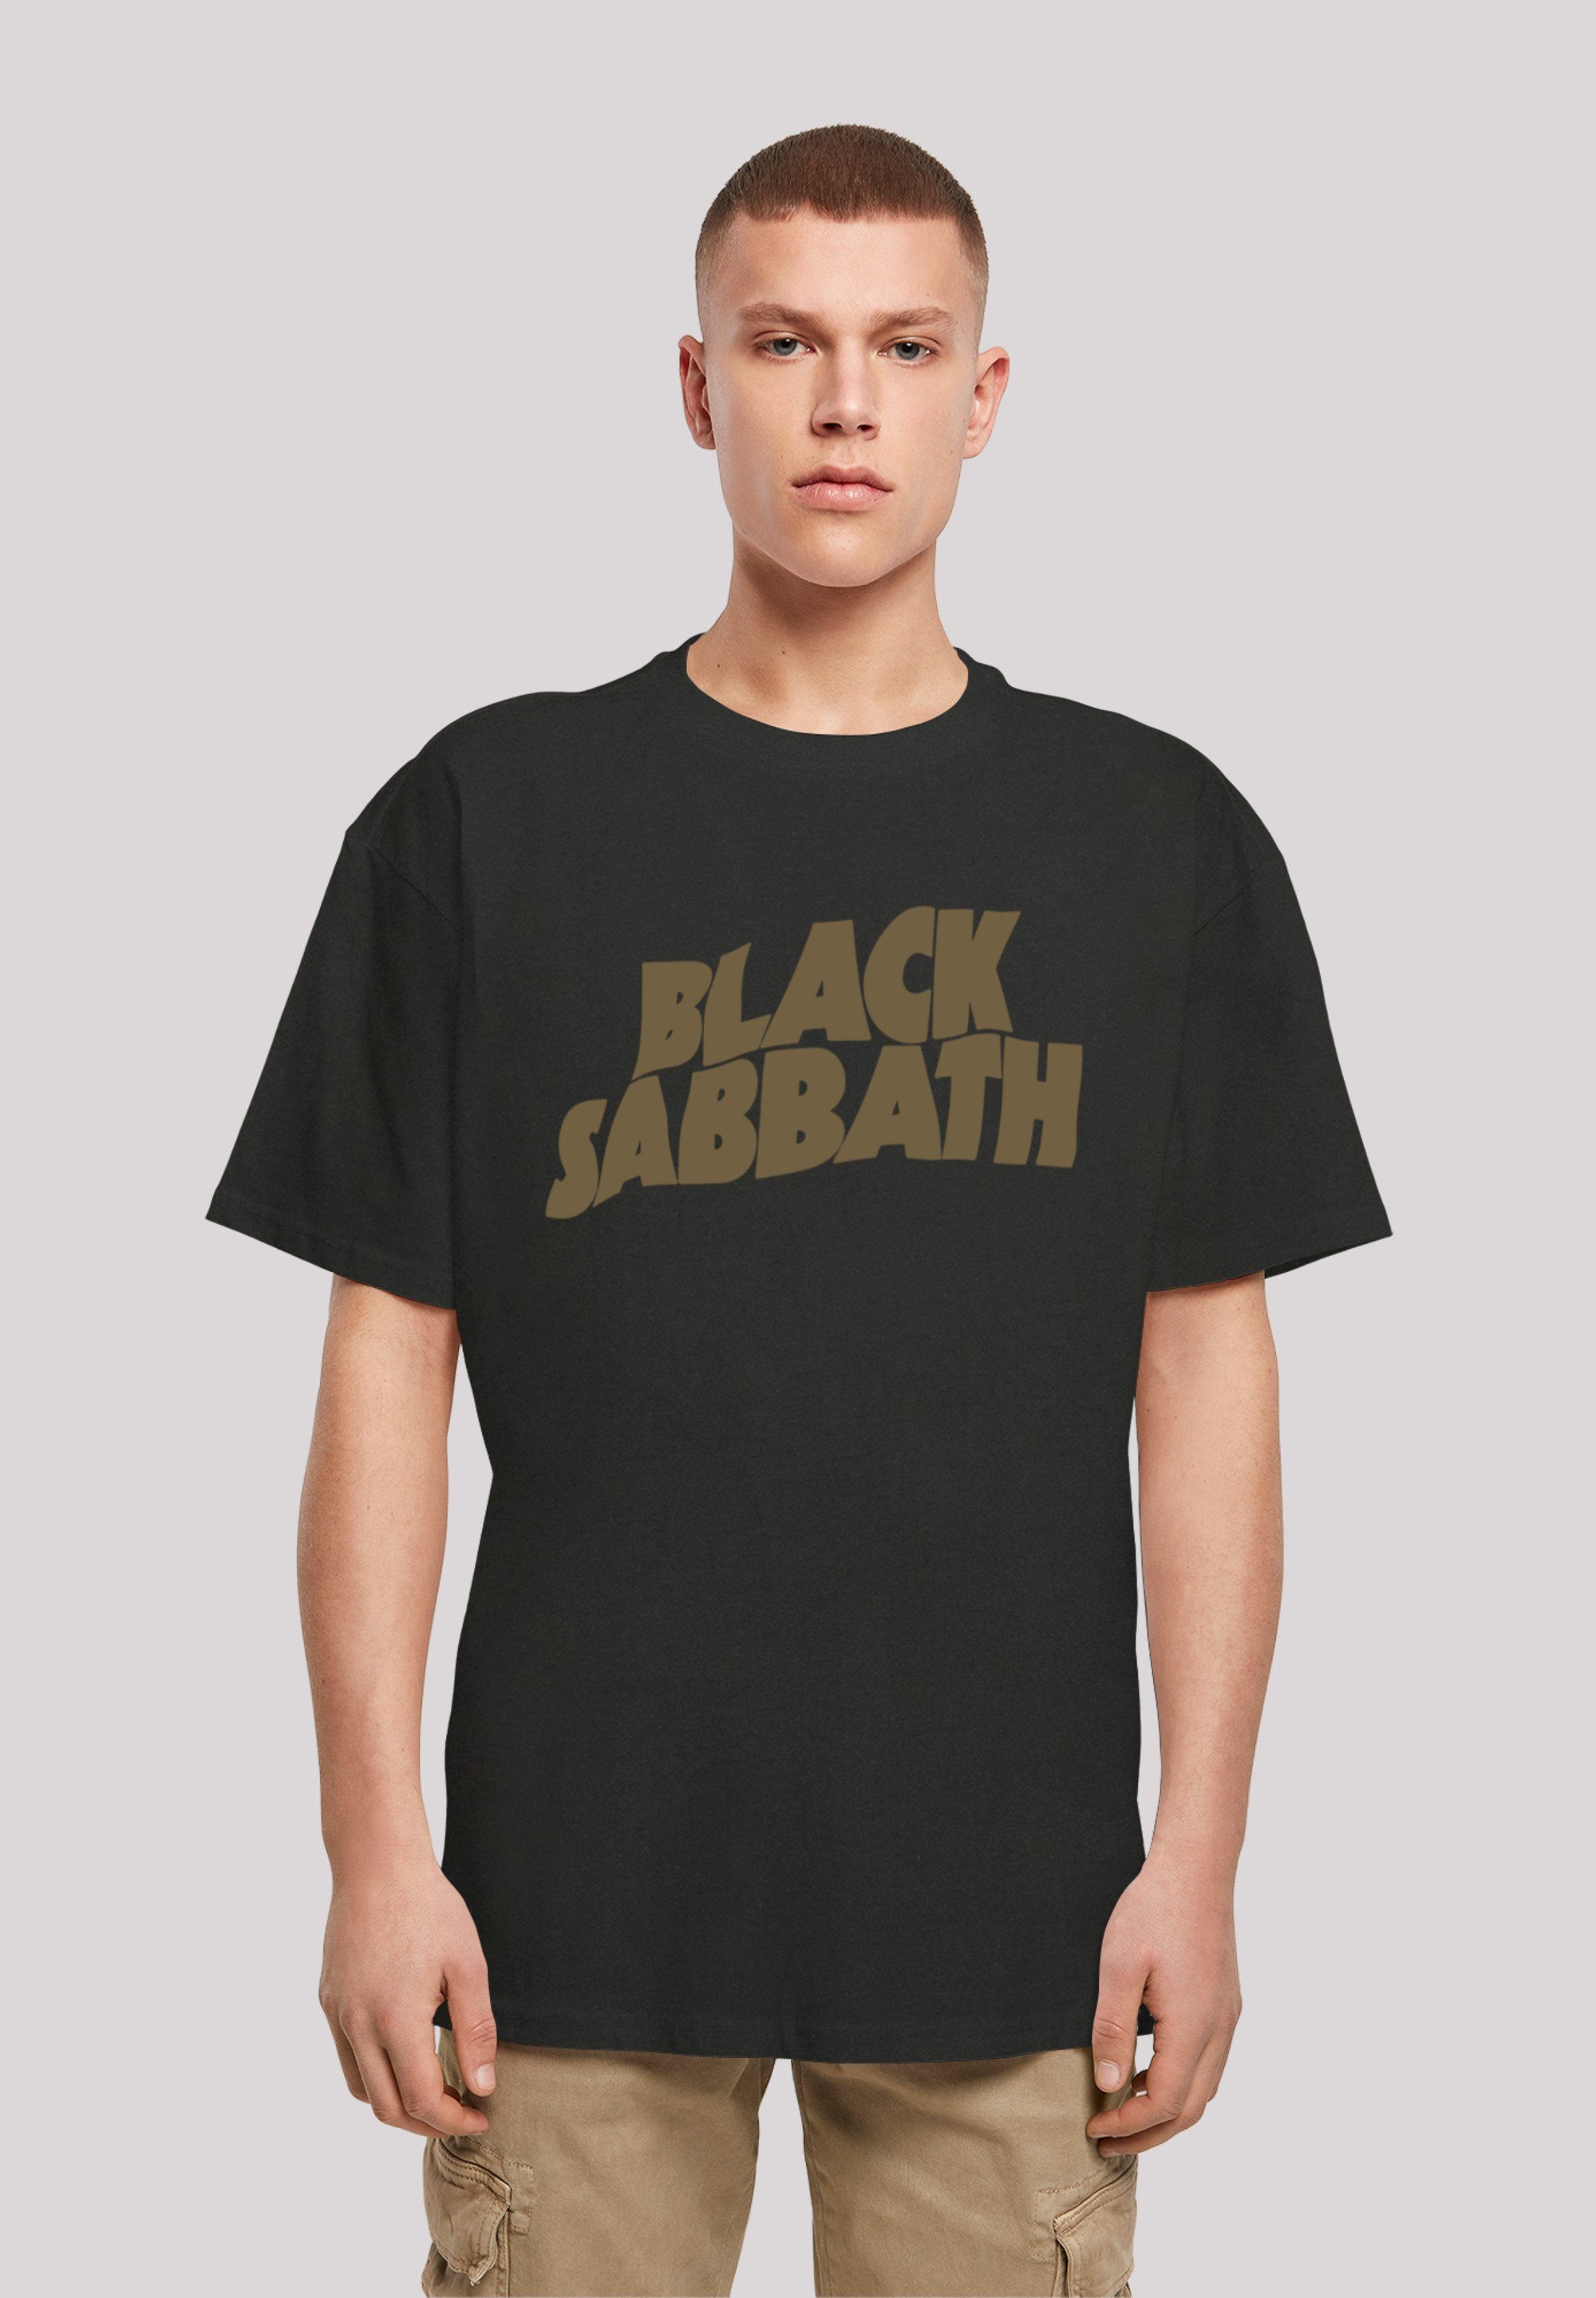 Tour Print US Black Black F4NT4STIC Band 1978 T-Shirt Metal Zip Sabbath